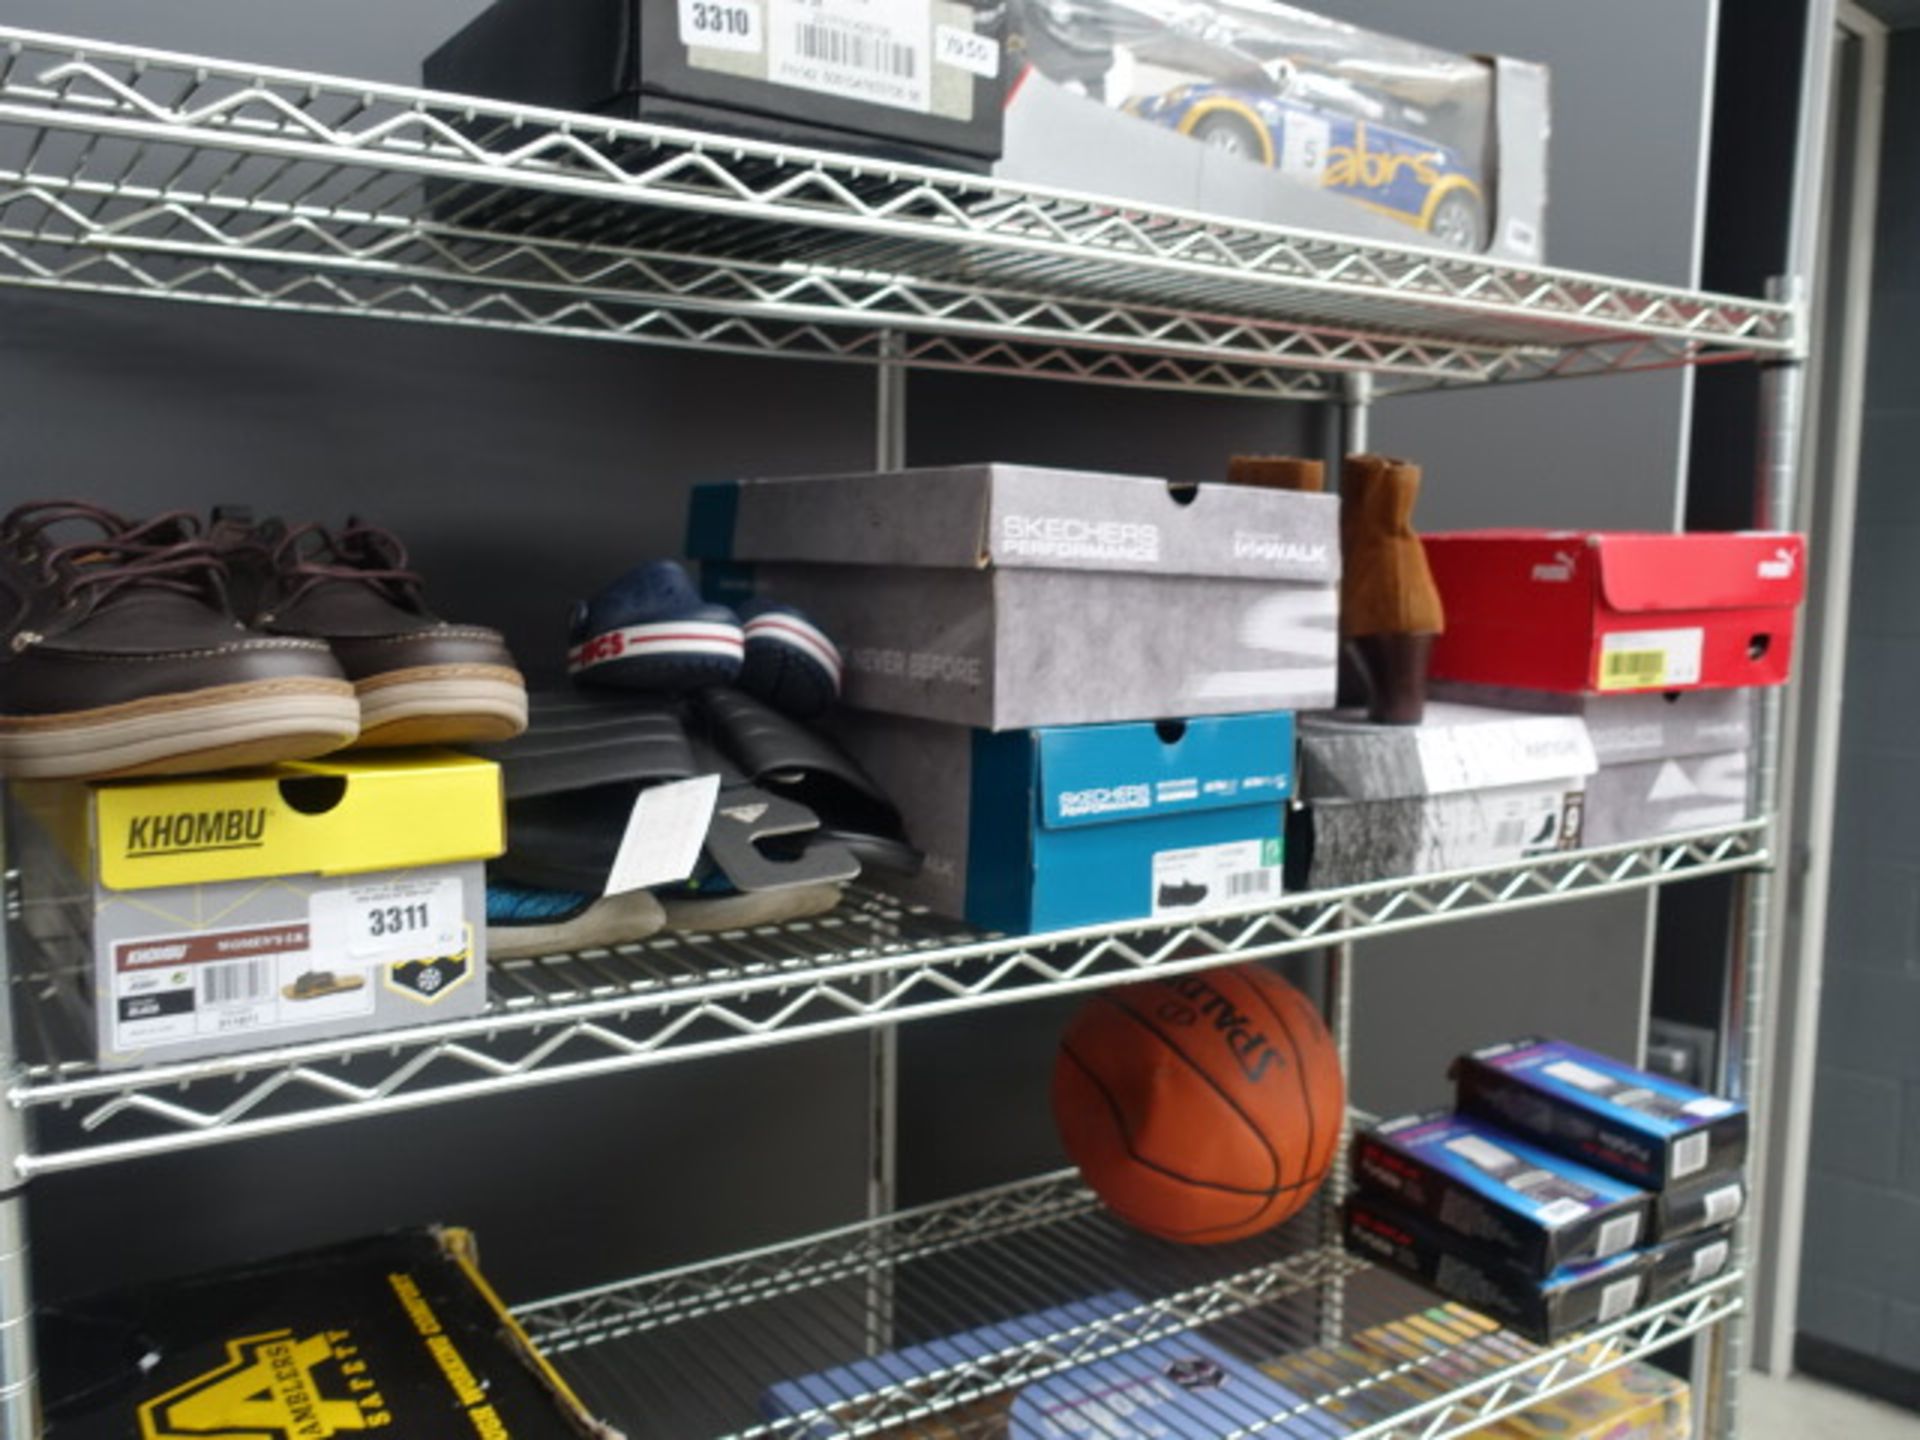 Shelf containing mixed paired shoes including Kumba, memory foam, Skechers, Puma, Adidas sandals etc